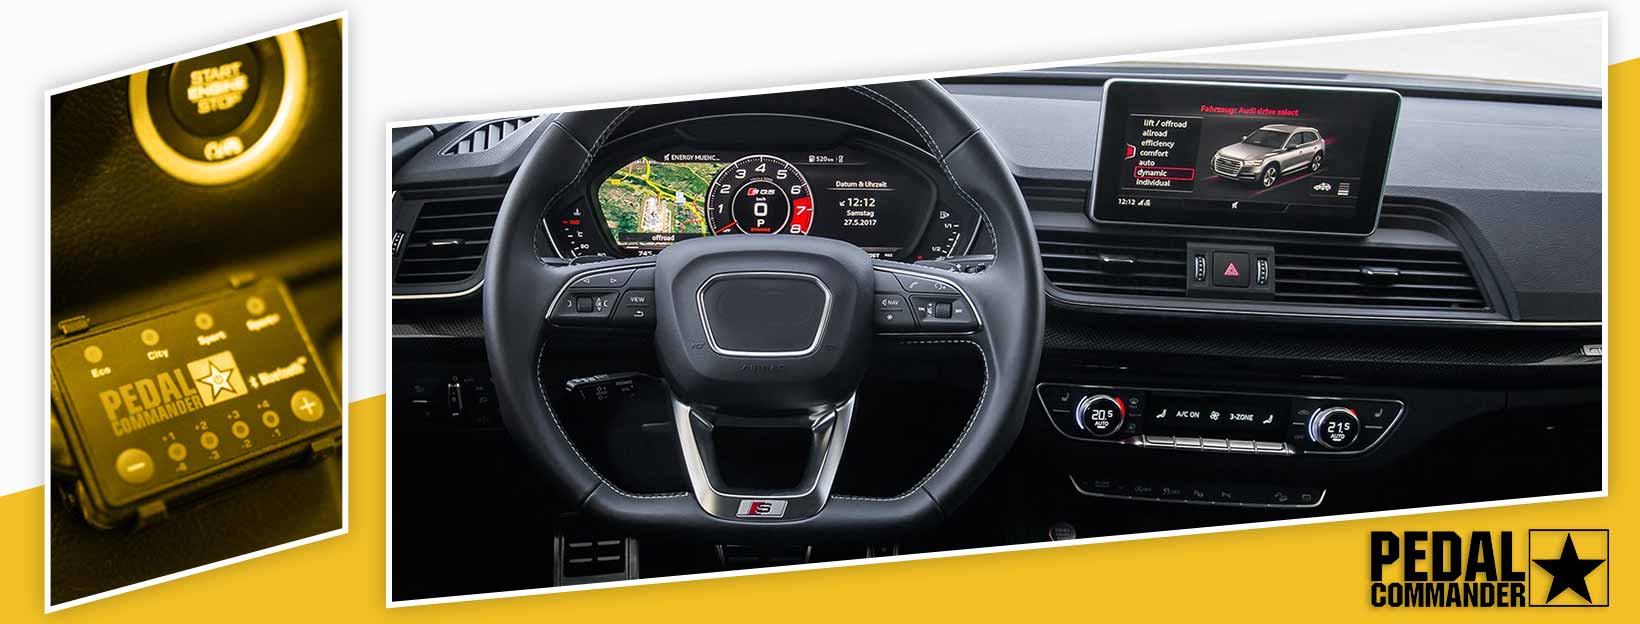 Pedal Commander for Audi SQ5 - interior